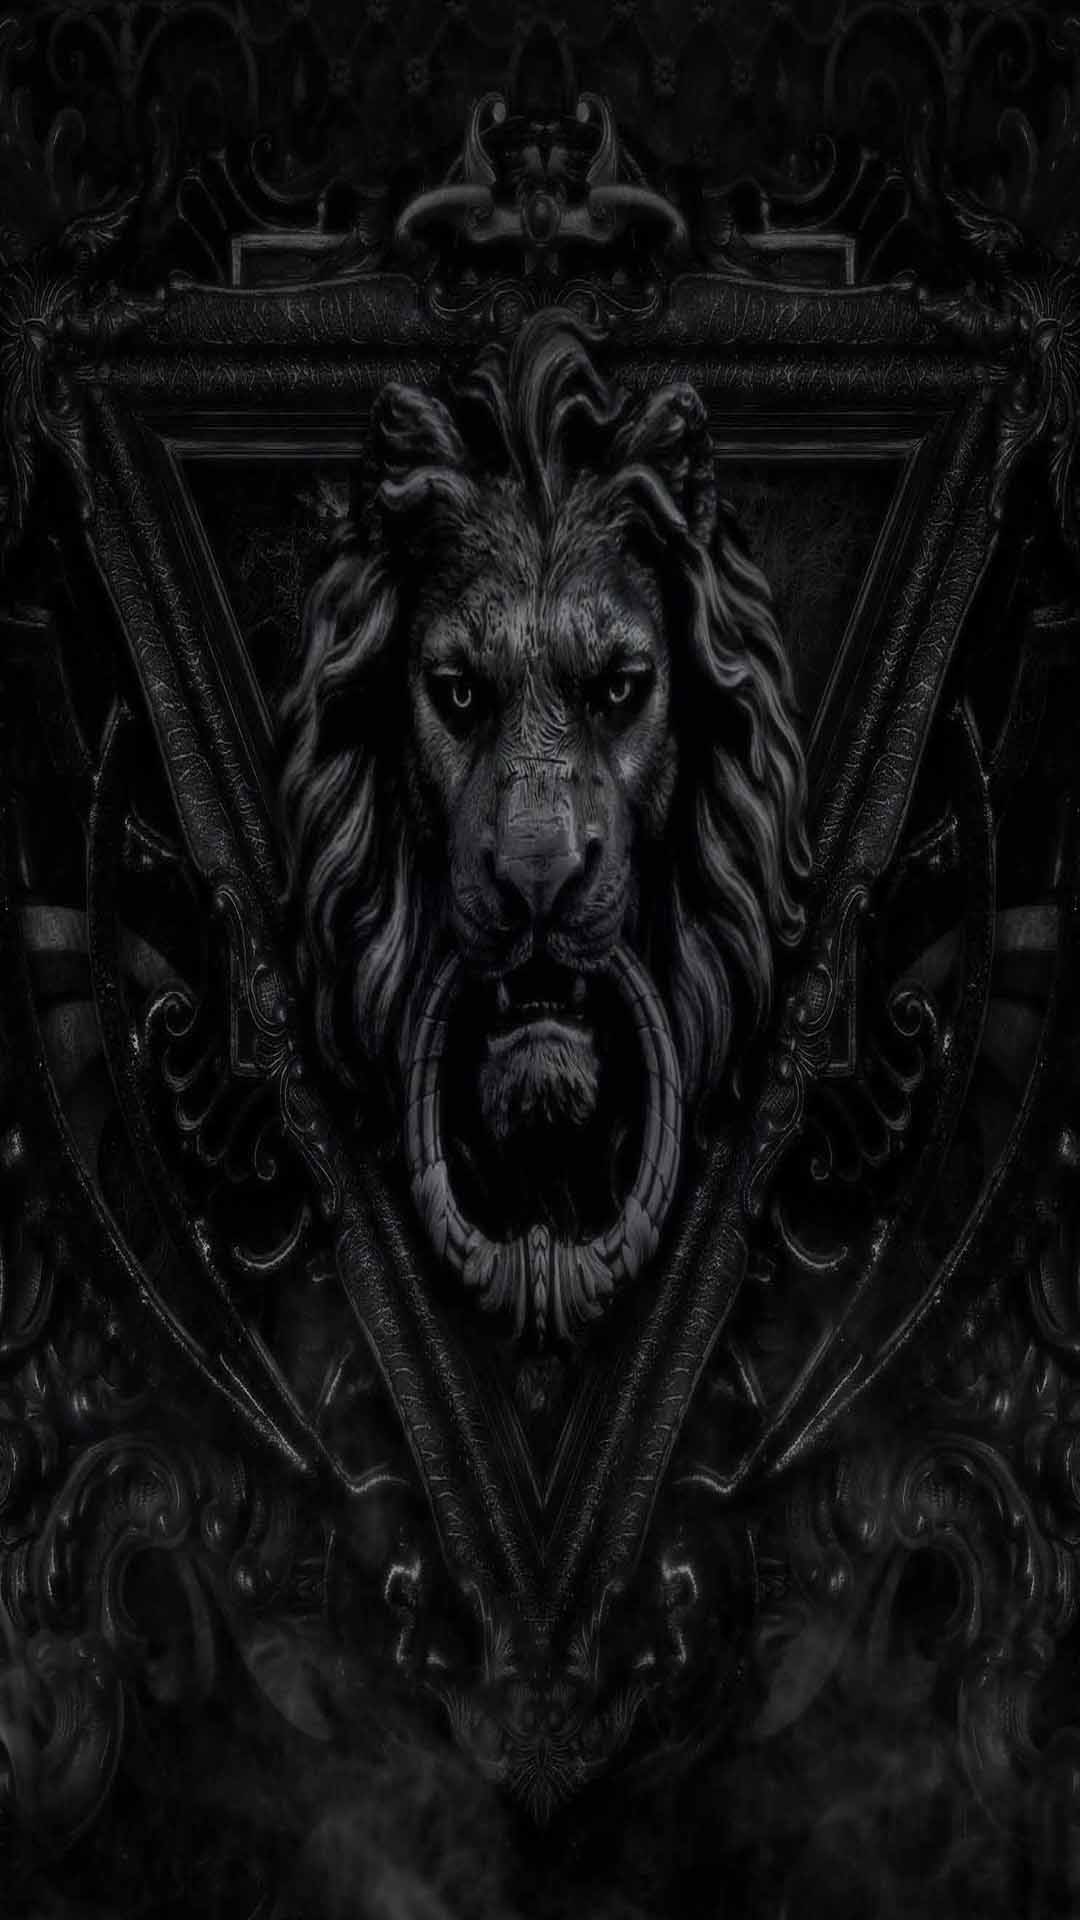 Dark lion iphone 5s full HD wallpaper free download. iPhone